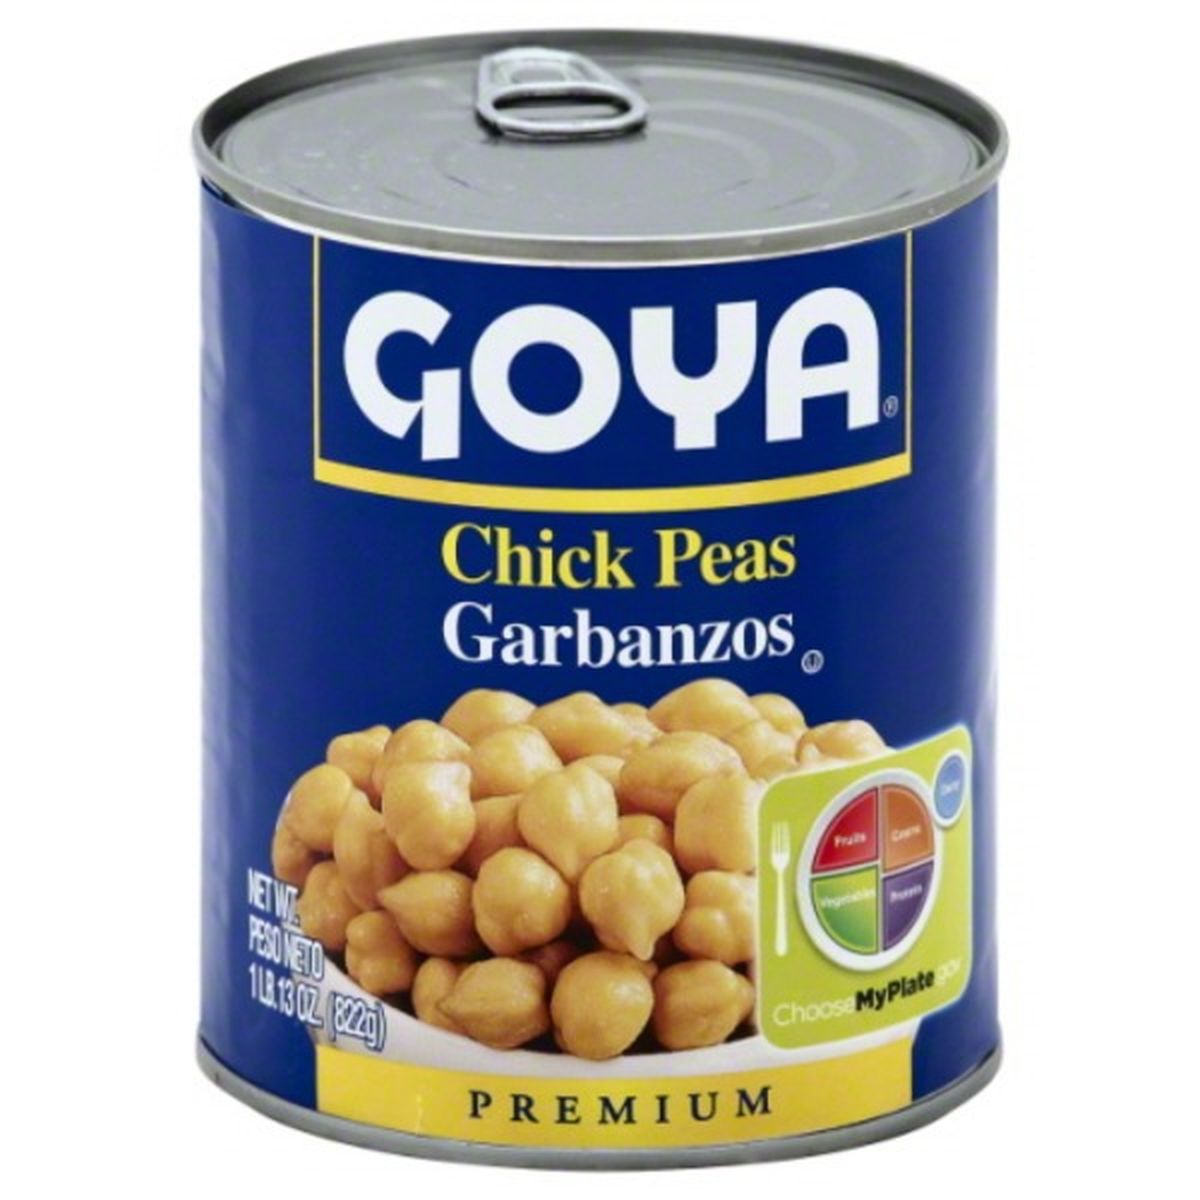 Calories in Goya Chick Peas, Garbanzos, Premium